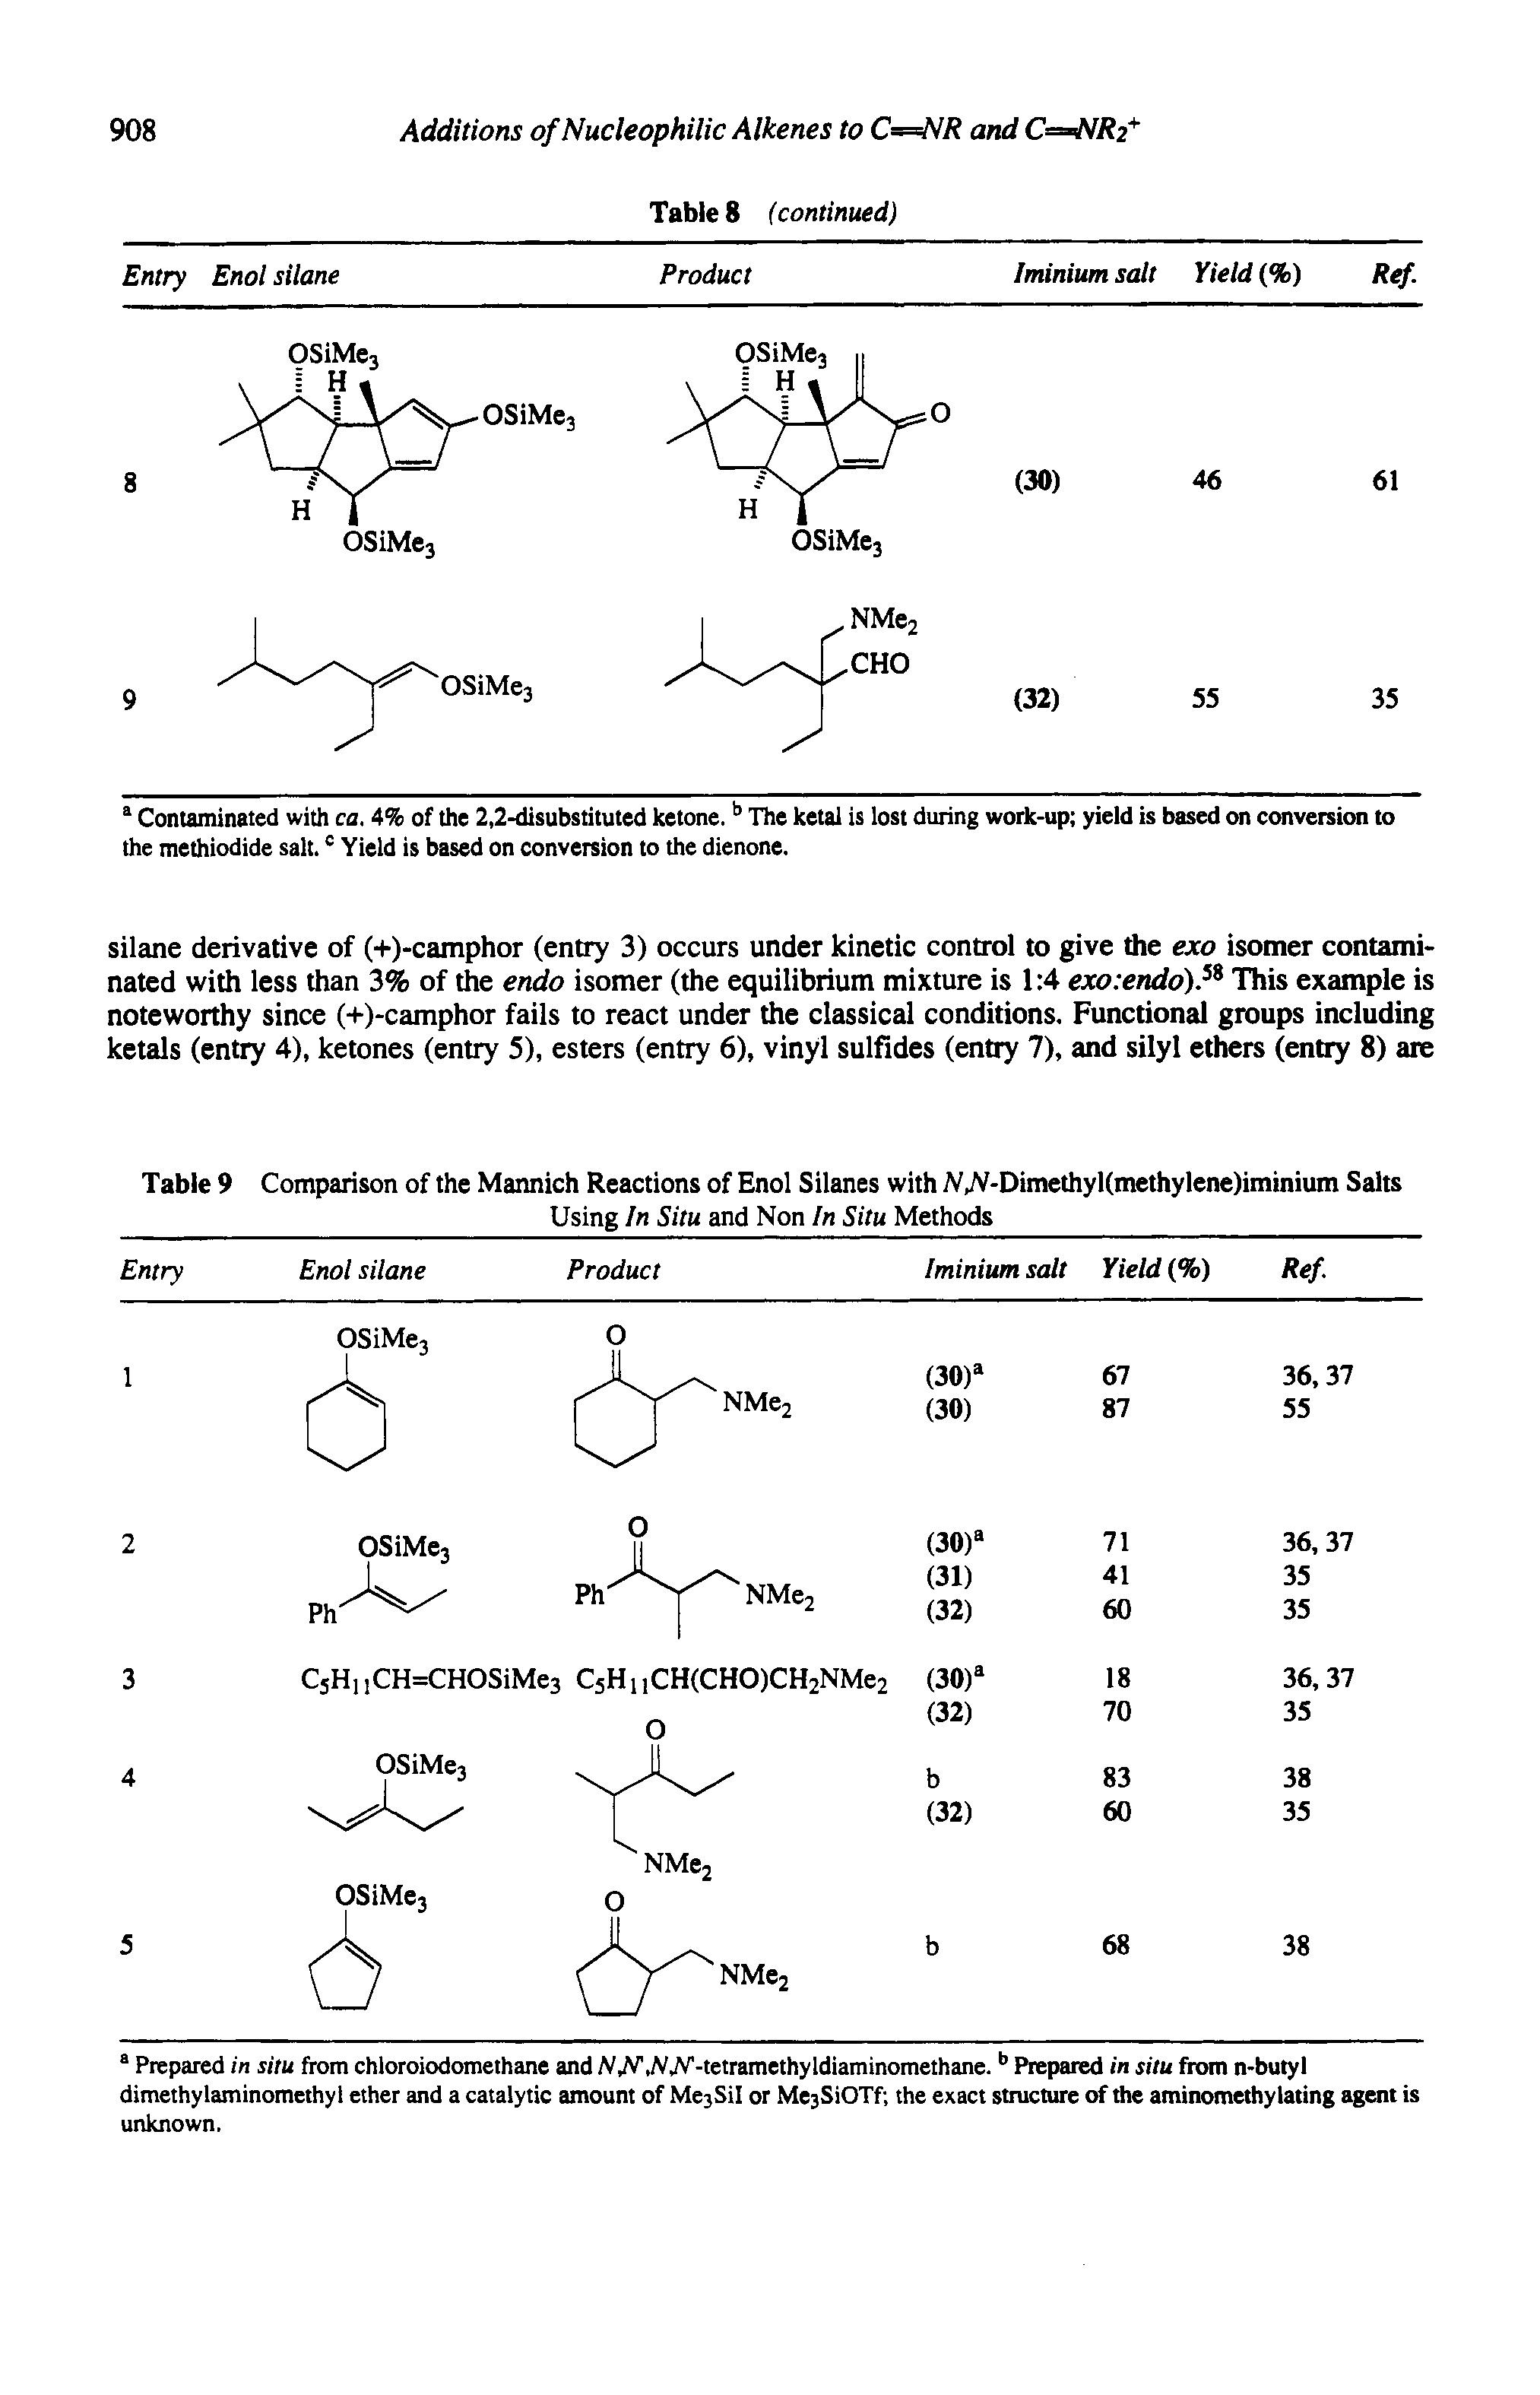 Table 9 Comparison of the Mannich Reactions of Enol Silanes with N.N-Dimethyl(methylene)iminium Salts...